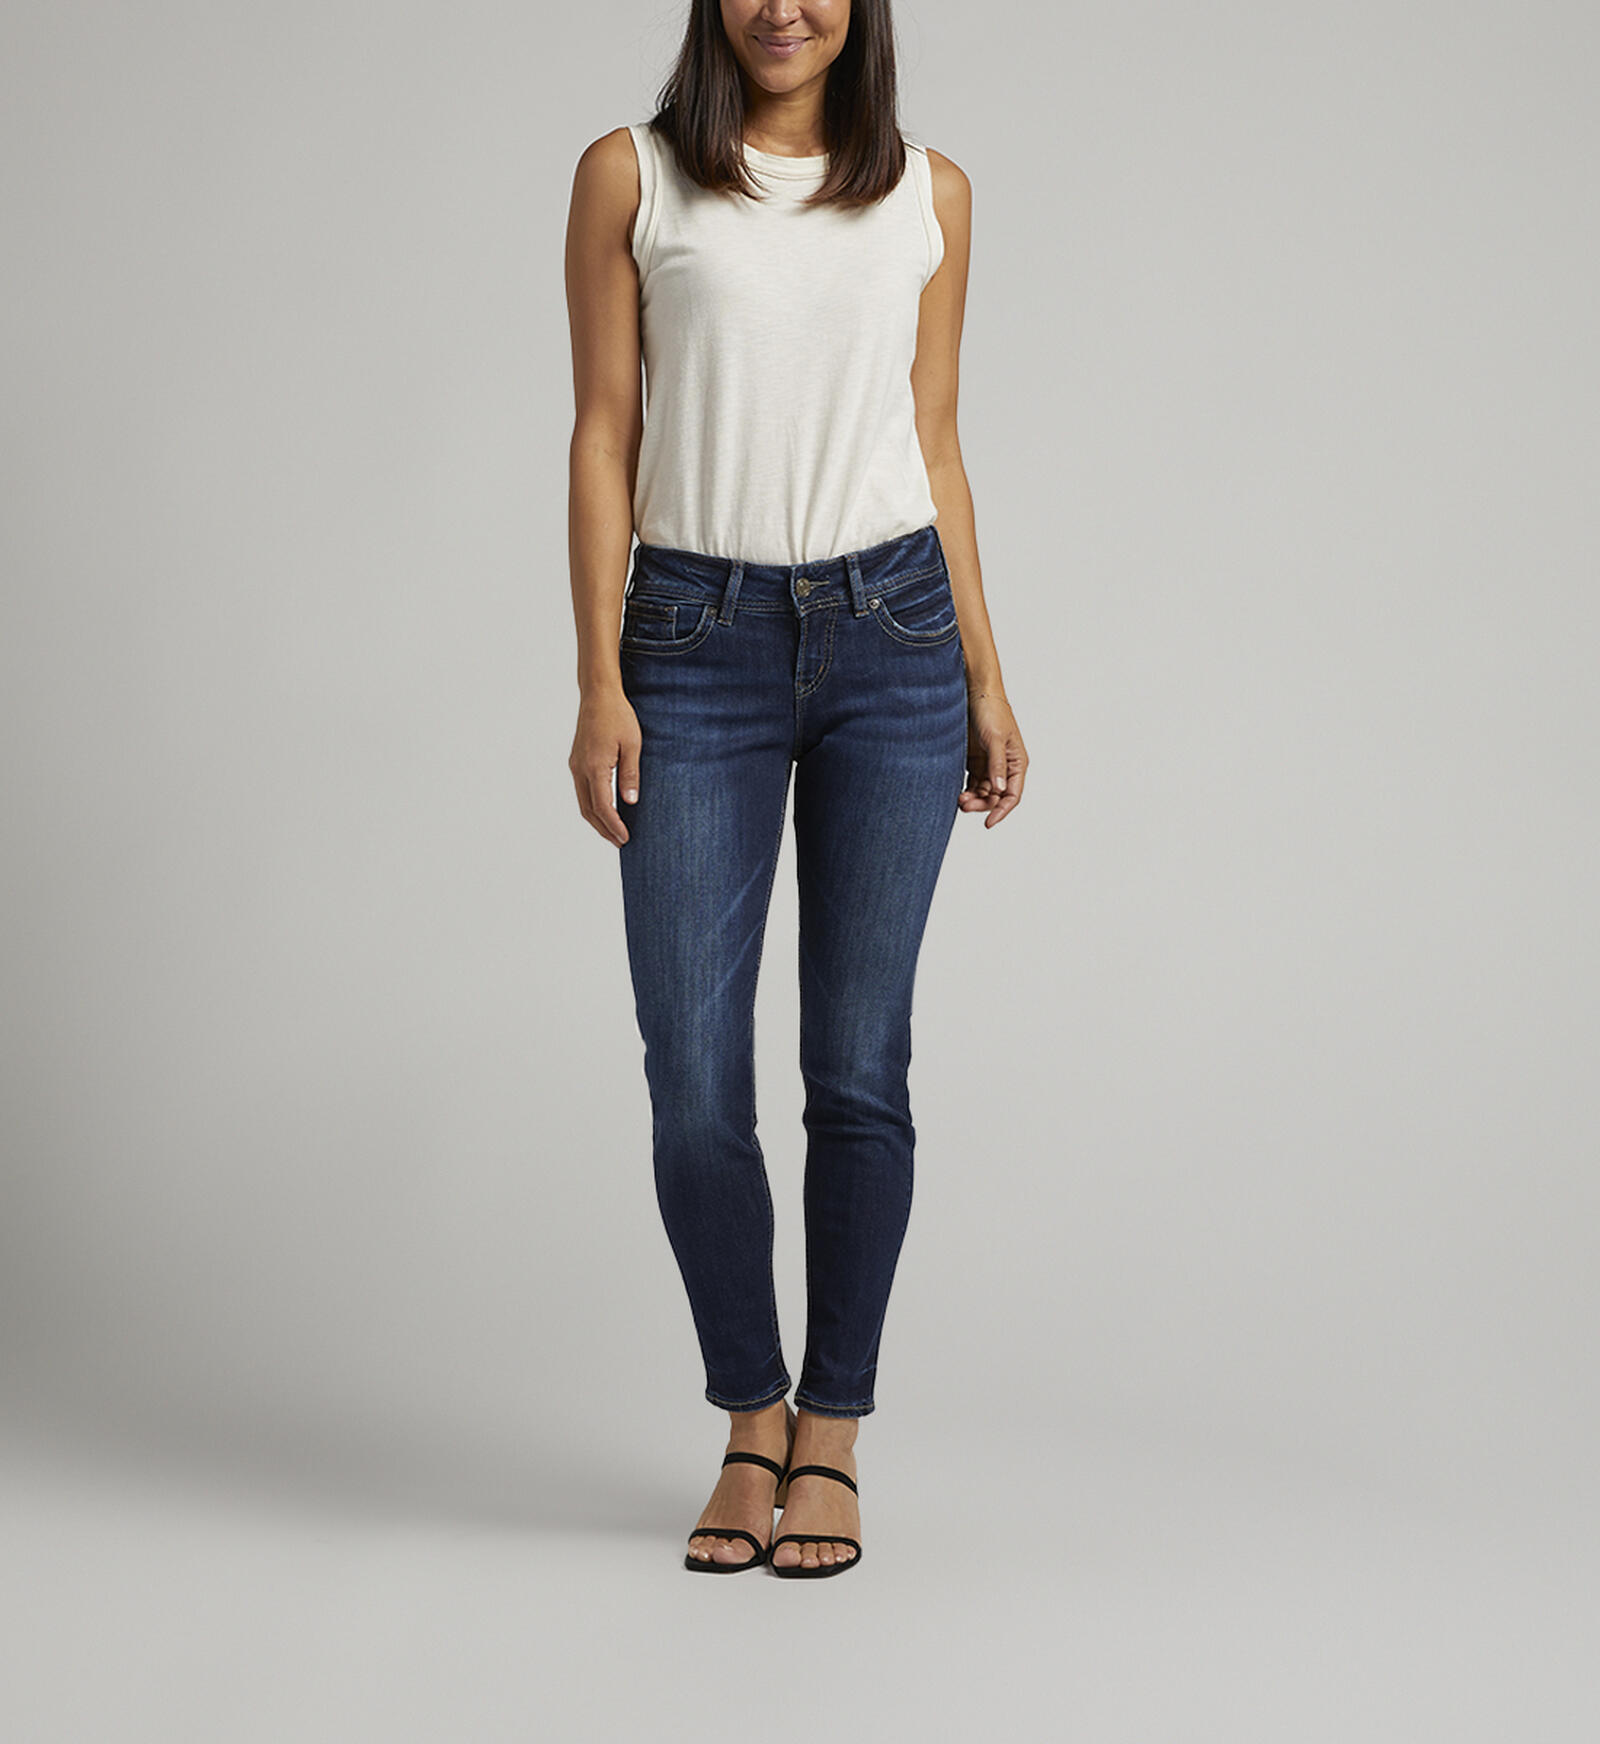 Buy Women's Slim Mid Rise Jeans Online